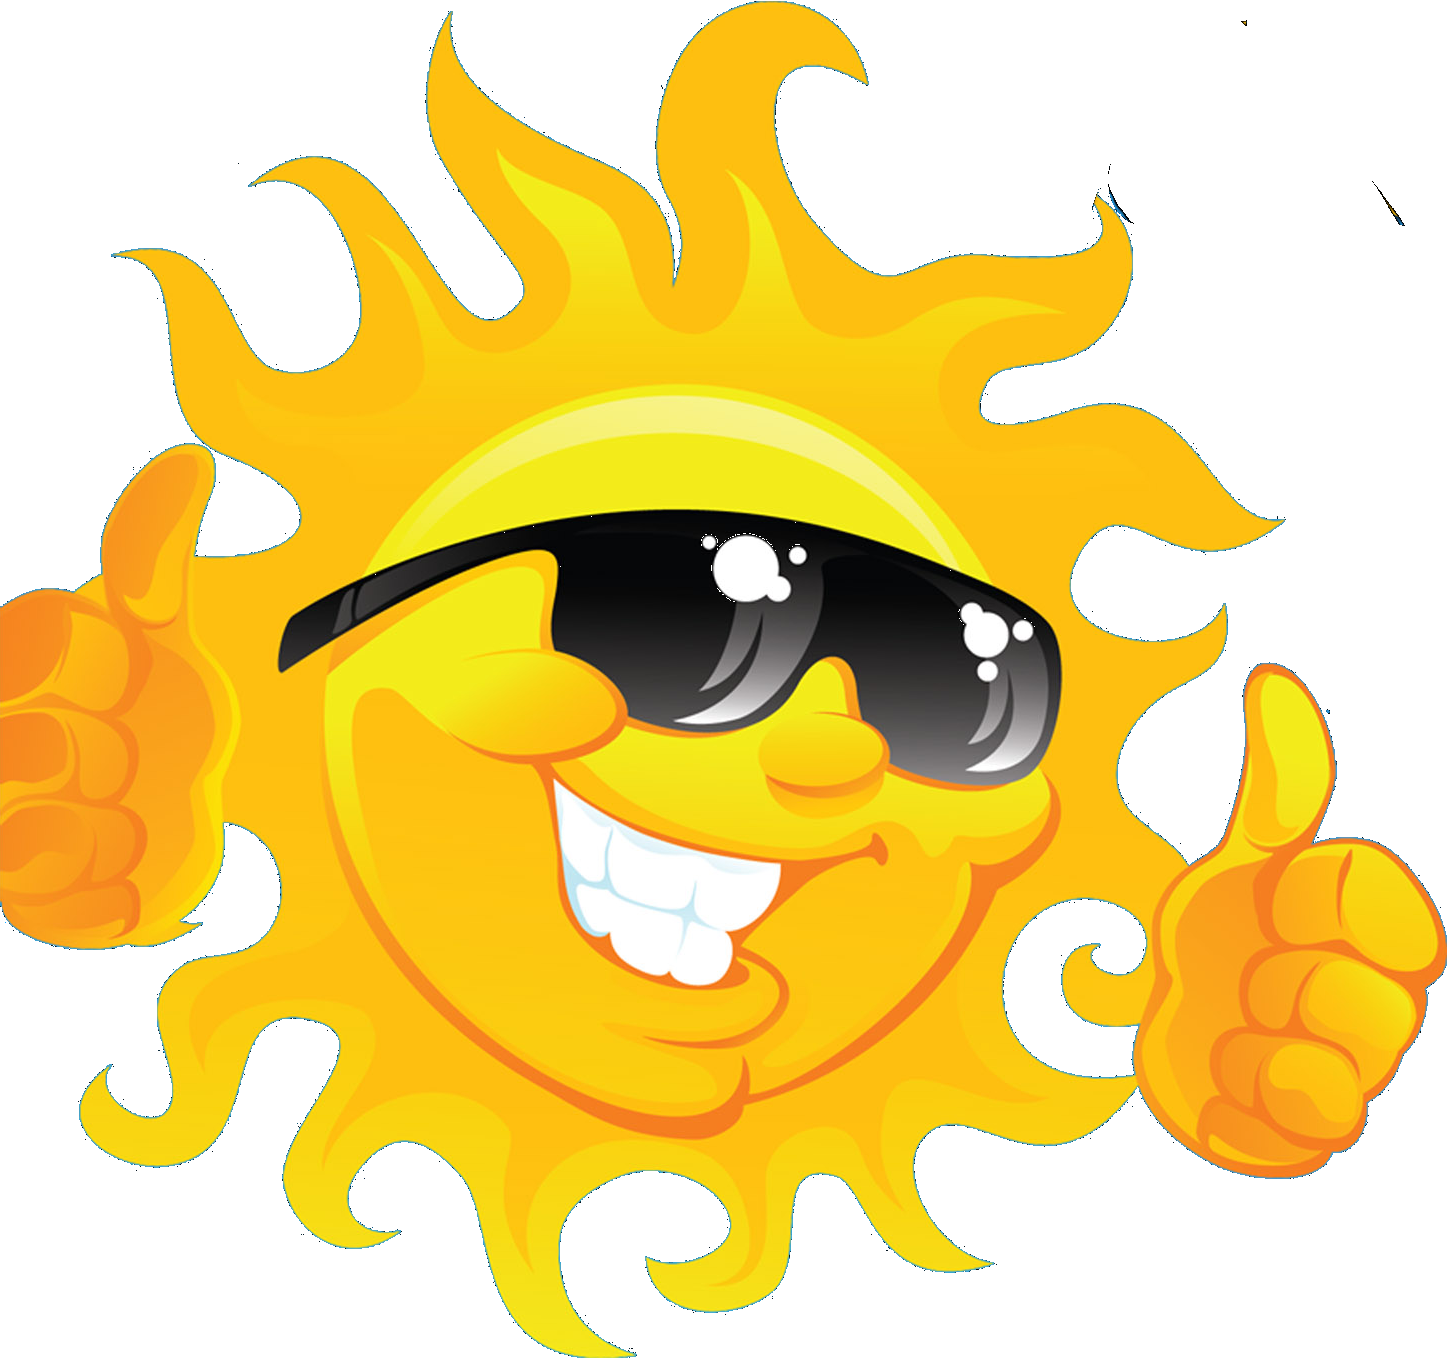 Smiling sun wearing sunglasses